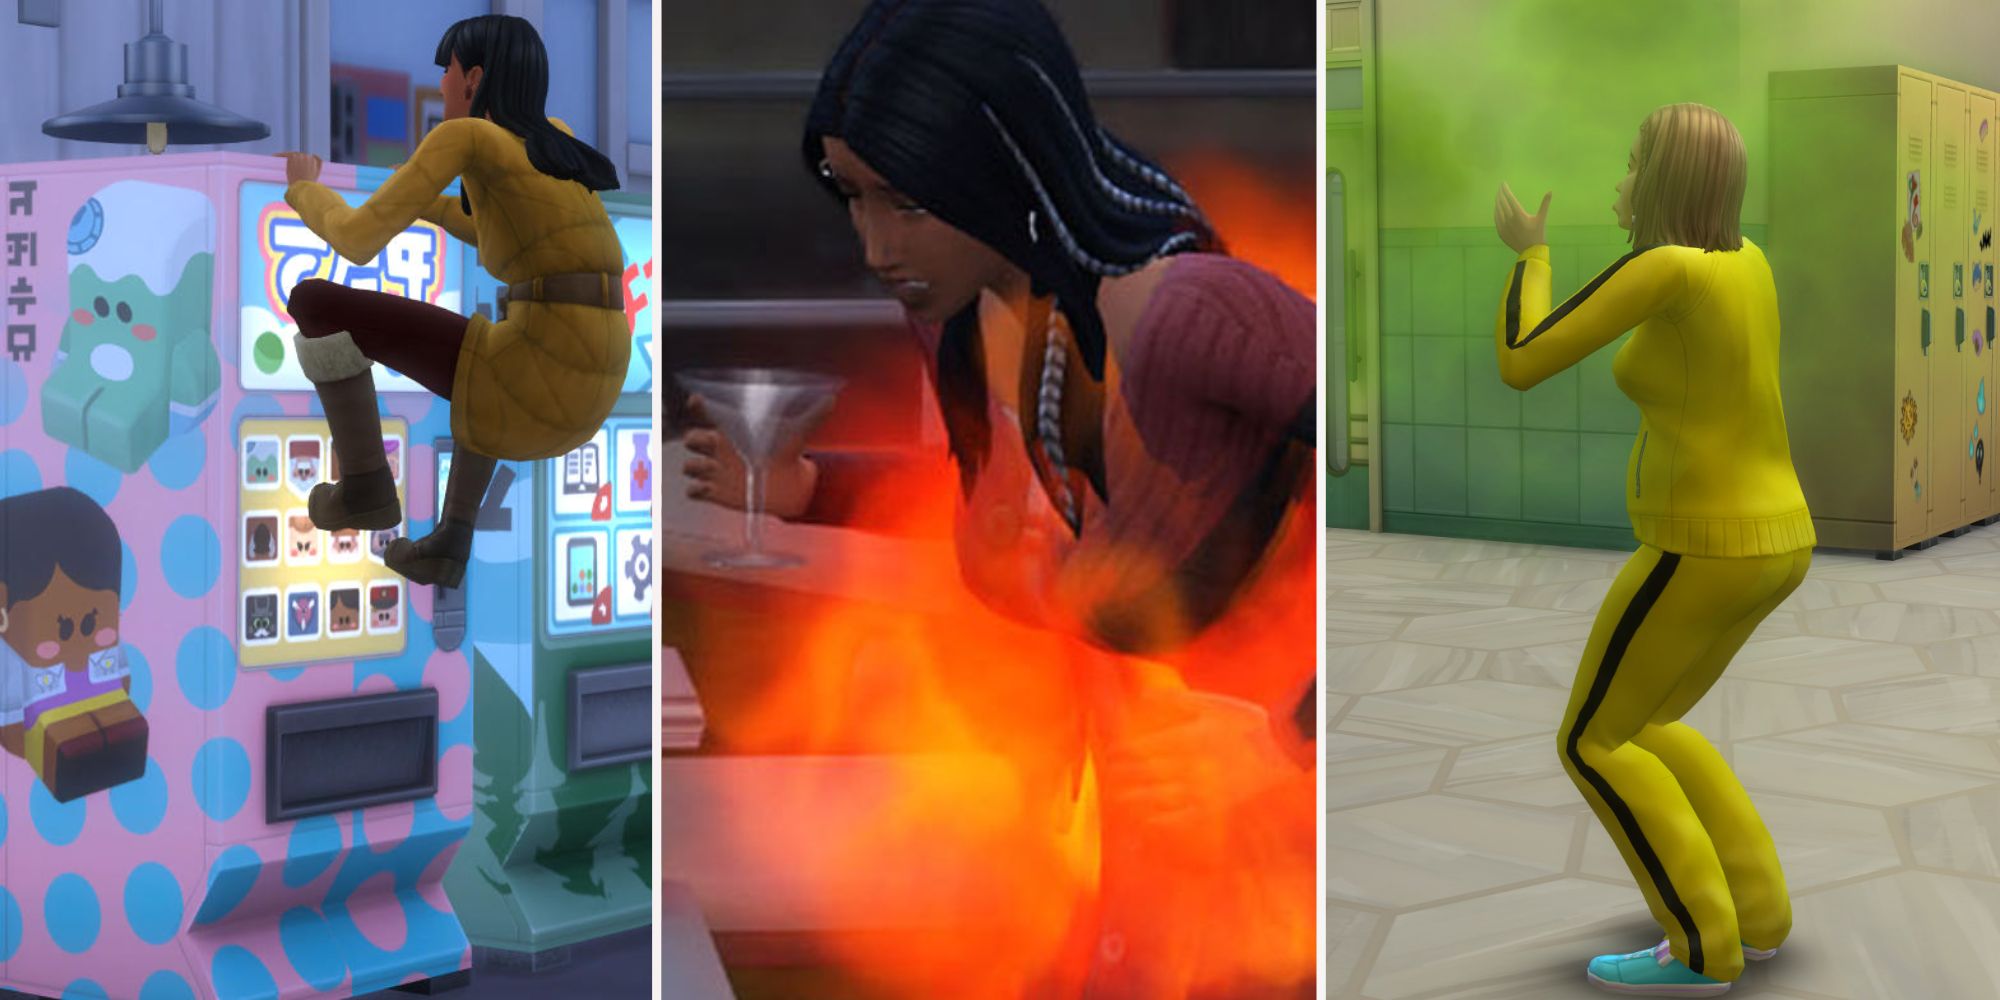 Sims 4 Deaths vending machine beetlejuice and prank